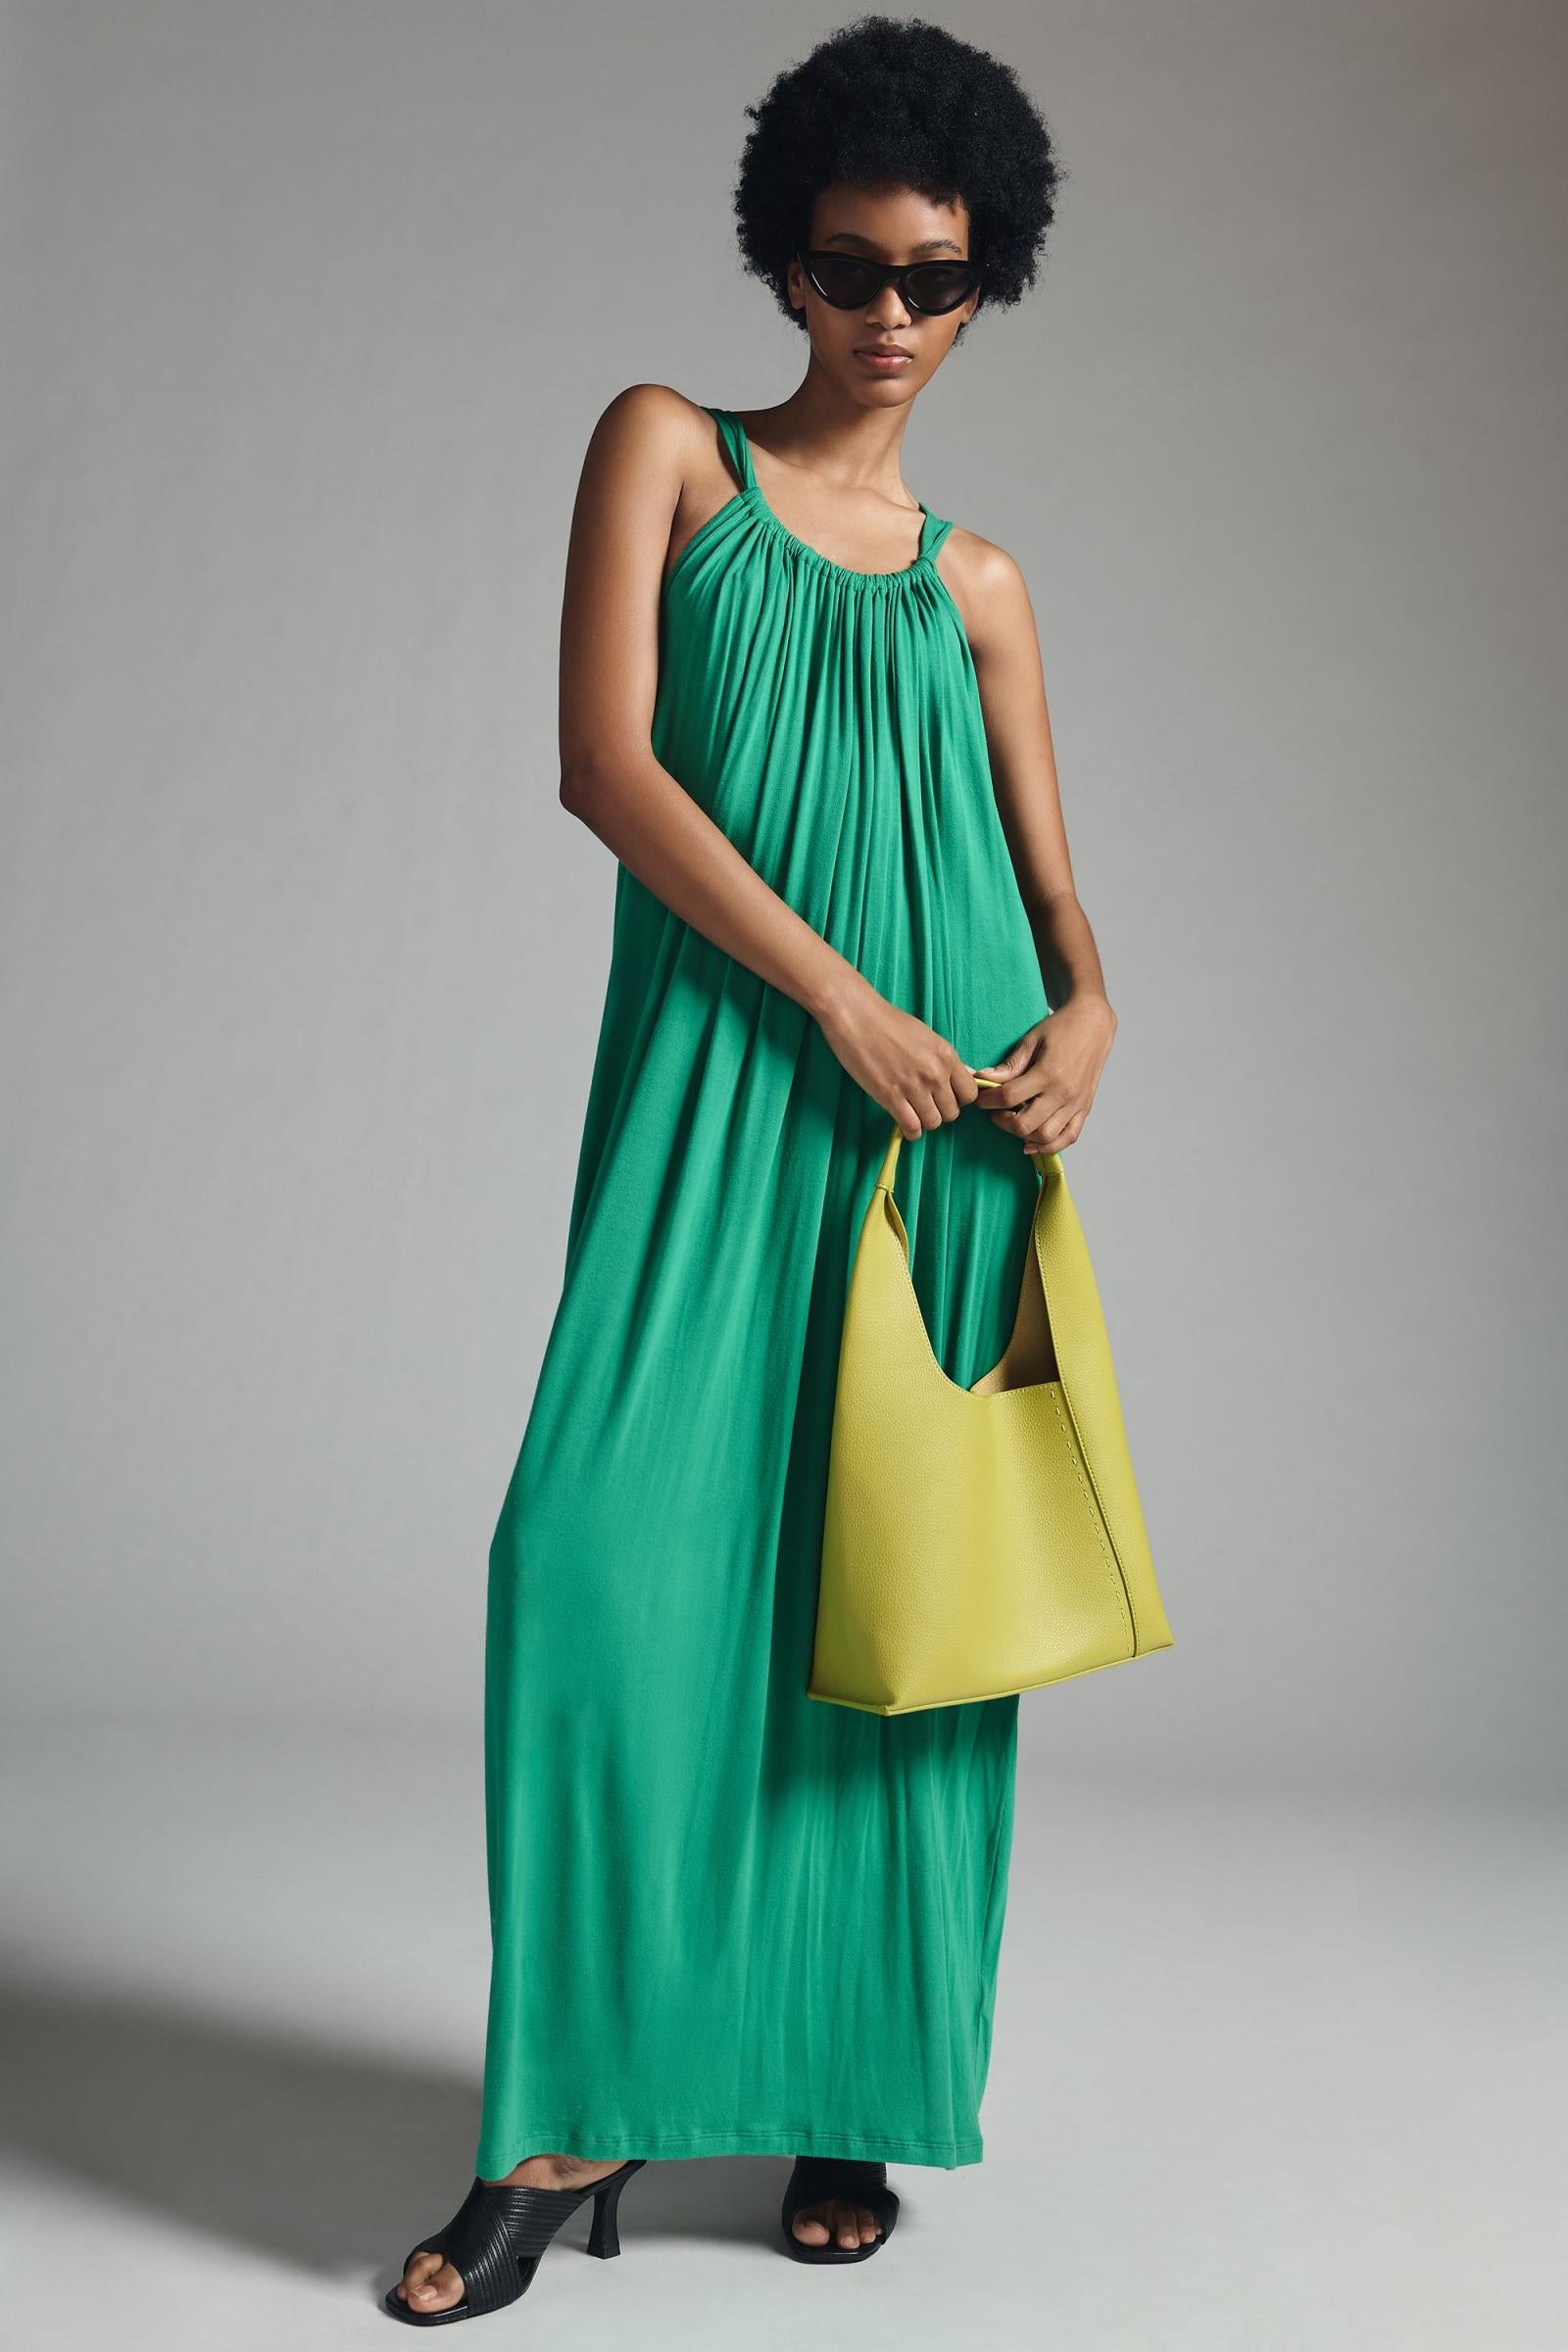 Cheyenne Green Jersey Dress by Velvet by Graham & Spencer